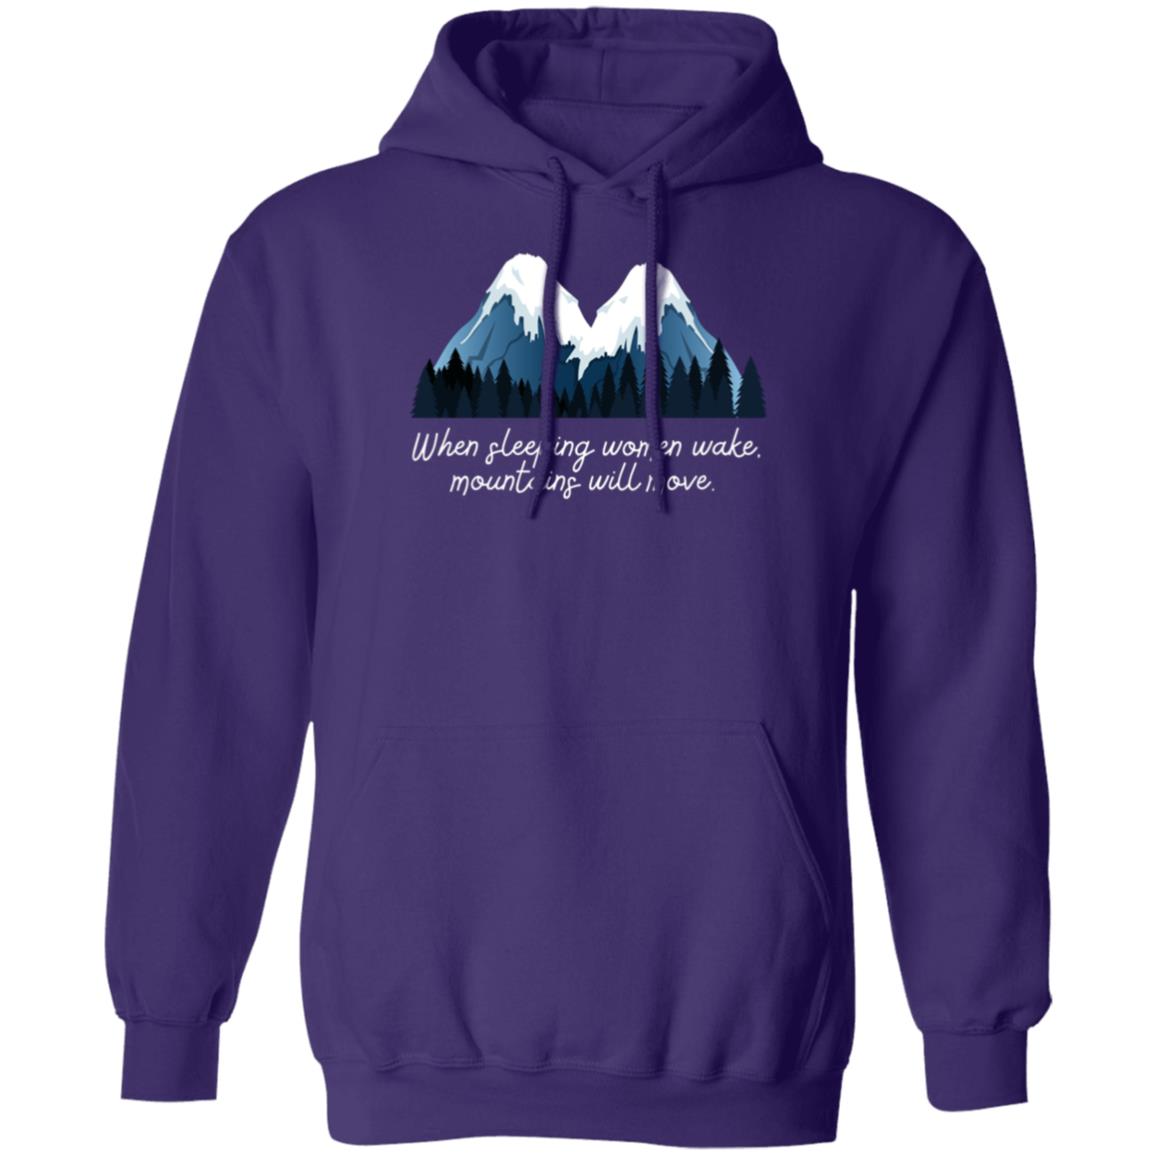 When sleeping women wake, mountains will move. Hooded Sweatshirt